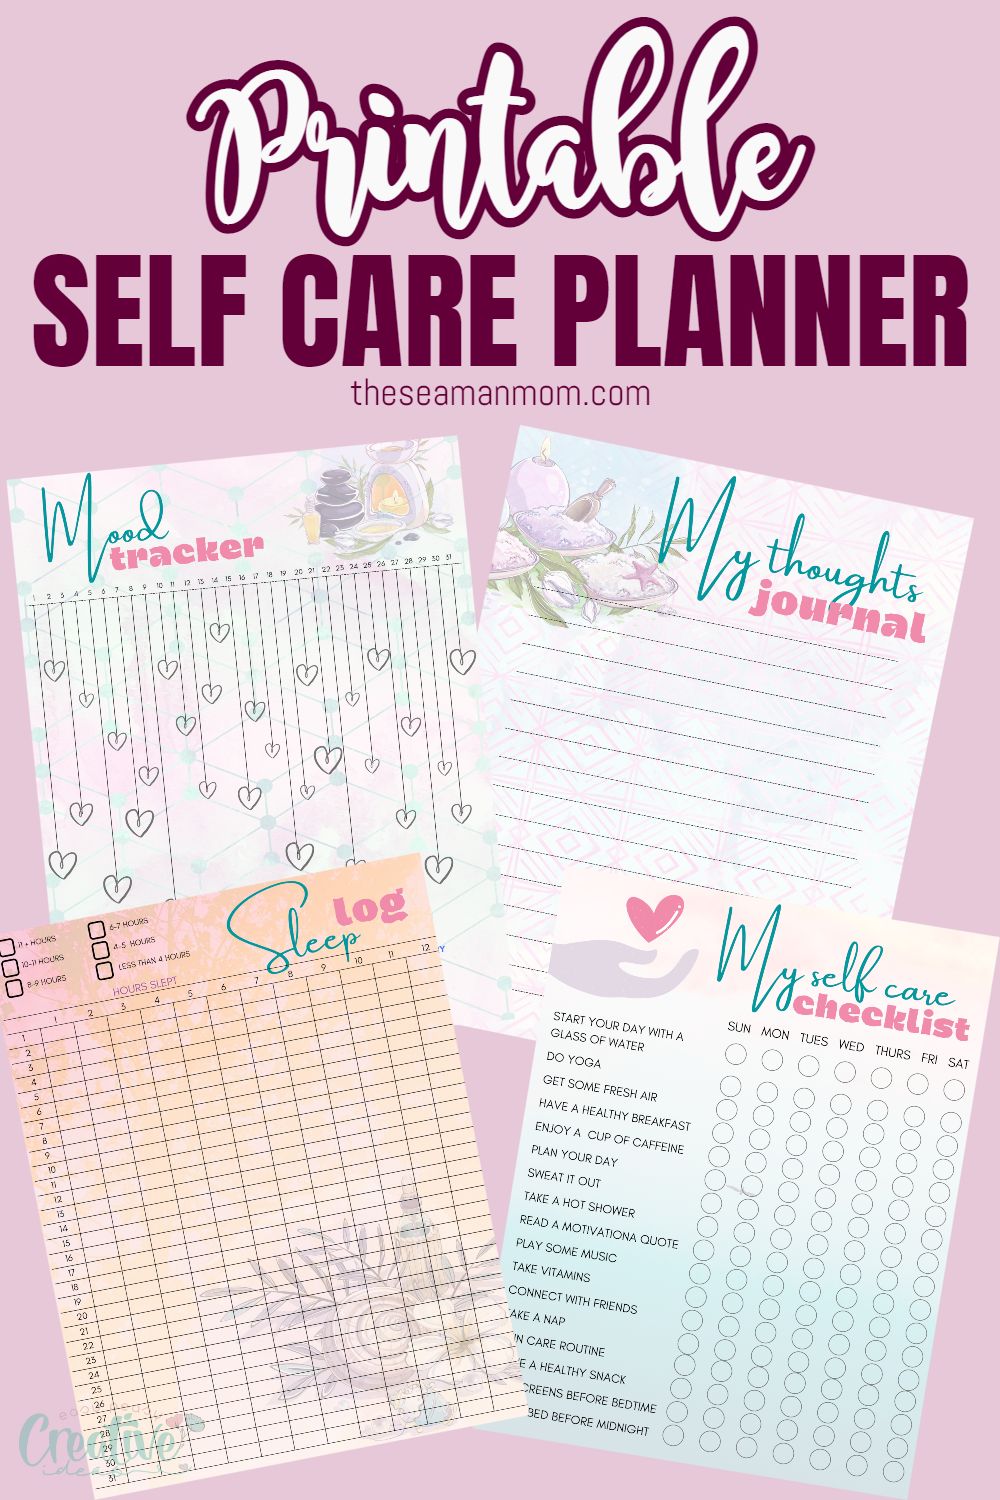 Self care plan